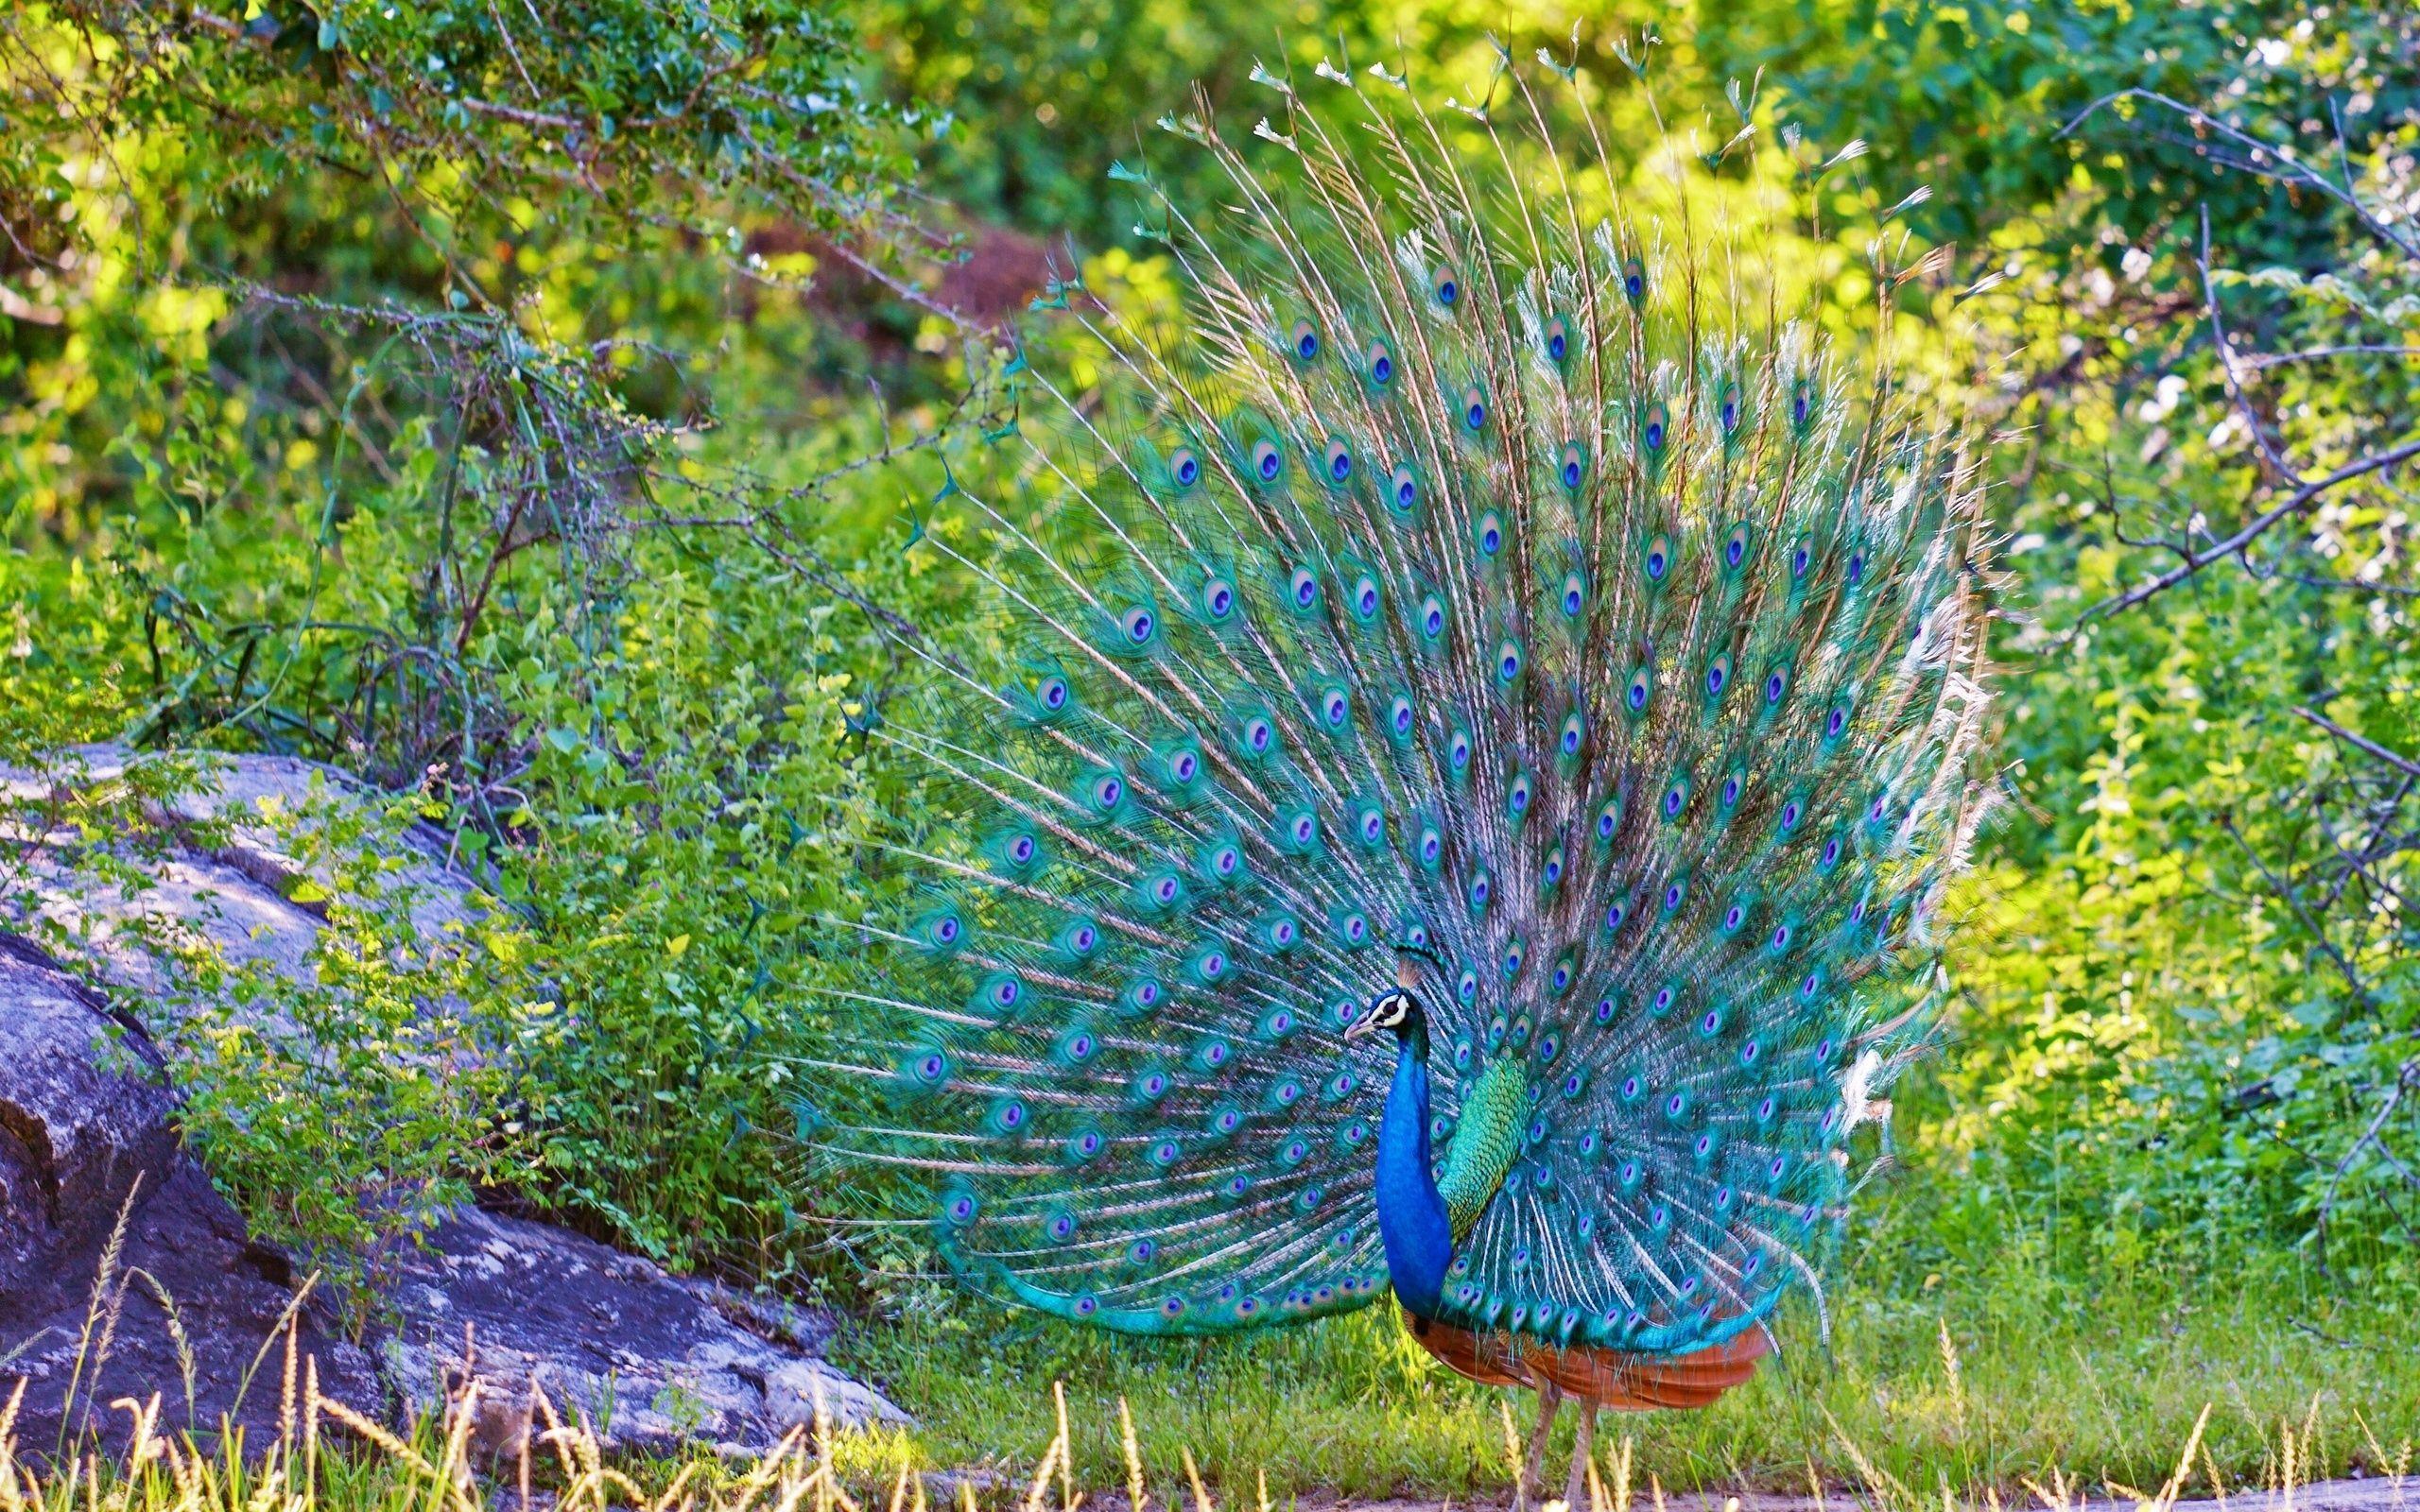 Beautiful Peacock Facebook Cover Photo Wallpaper. Peacock